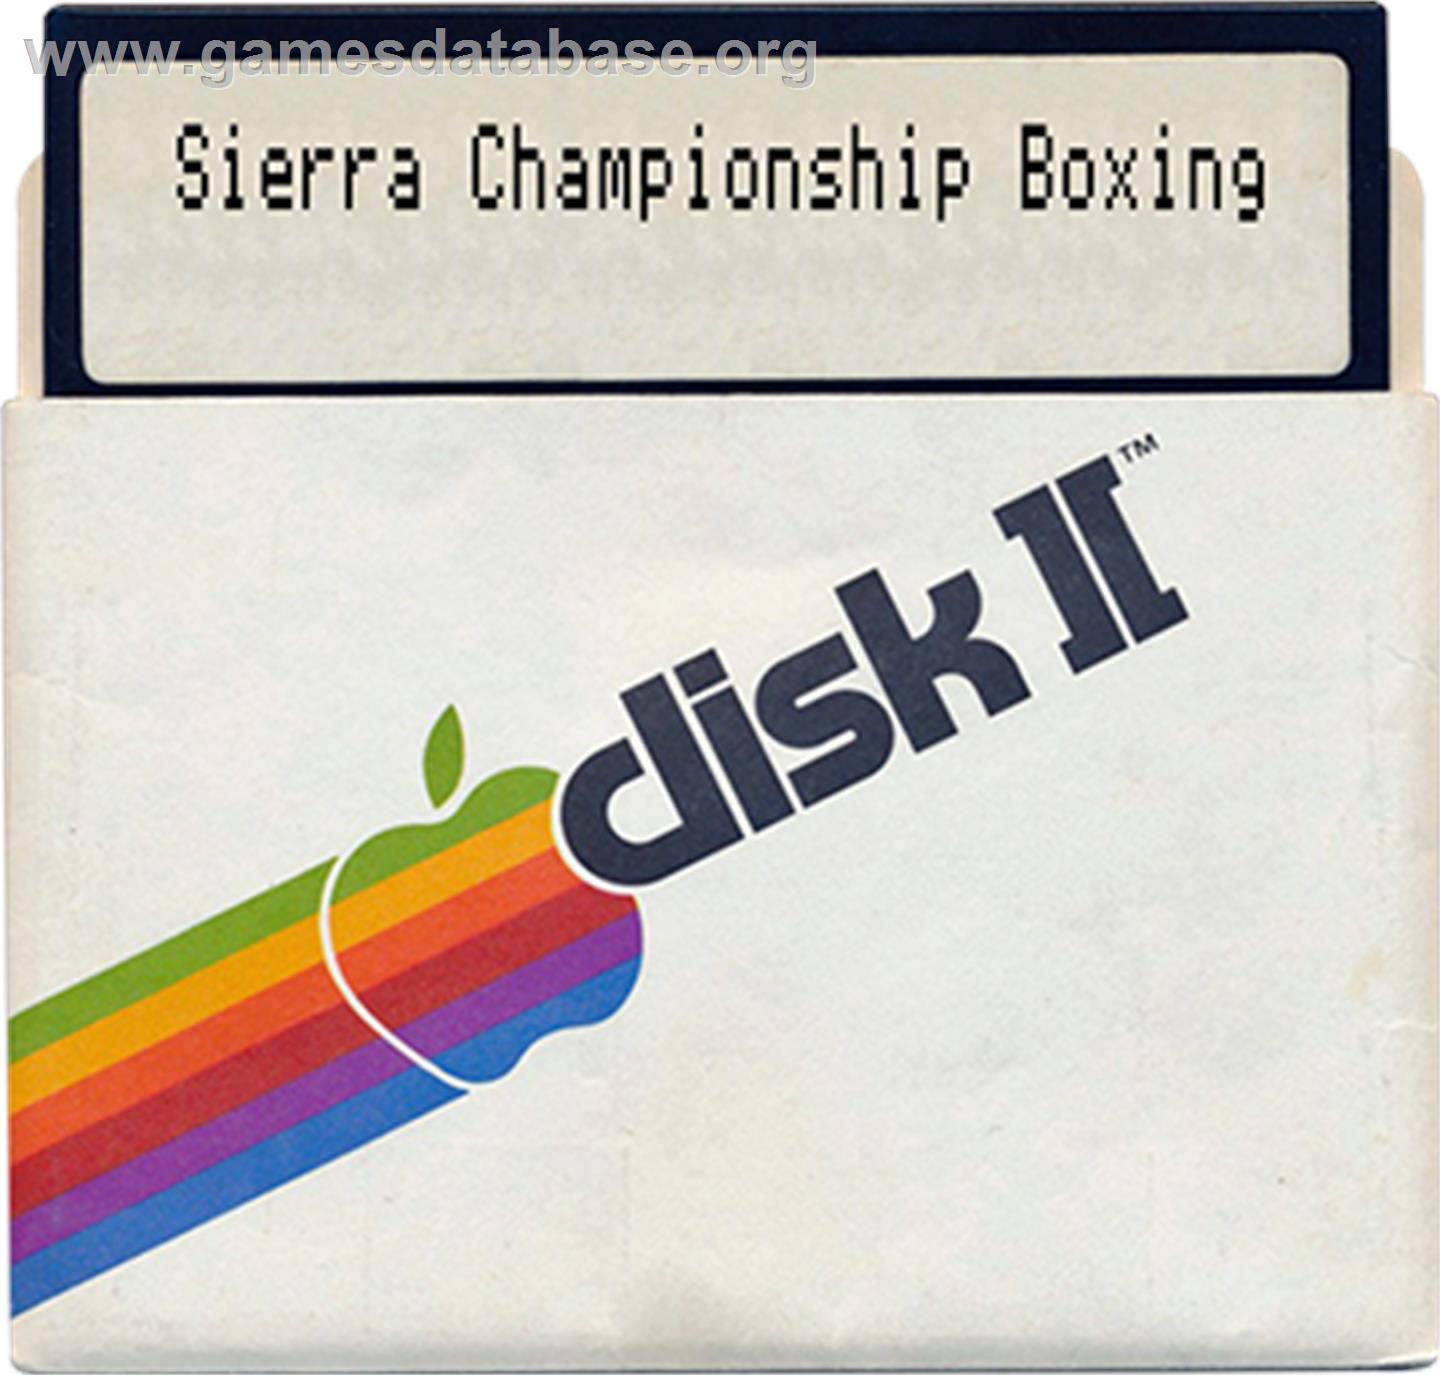 Sierra Championship Boxing - Apple II - Artwork - Disc